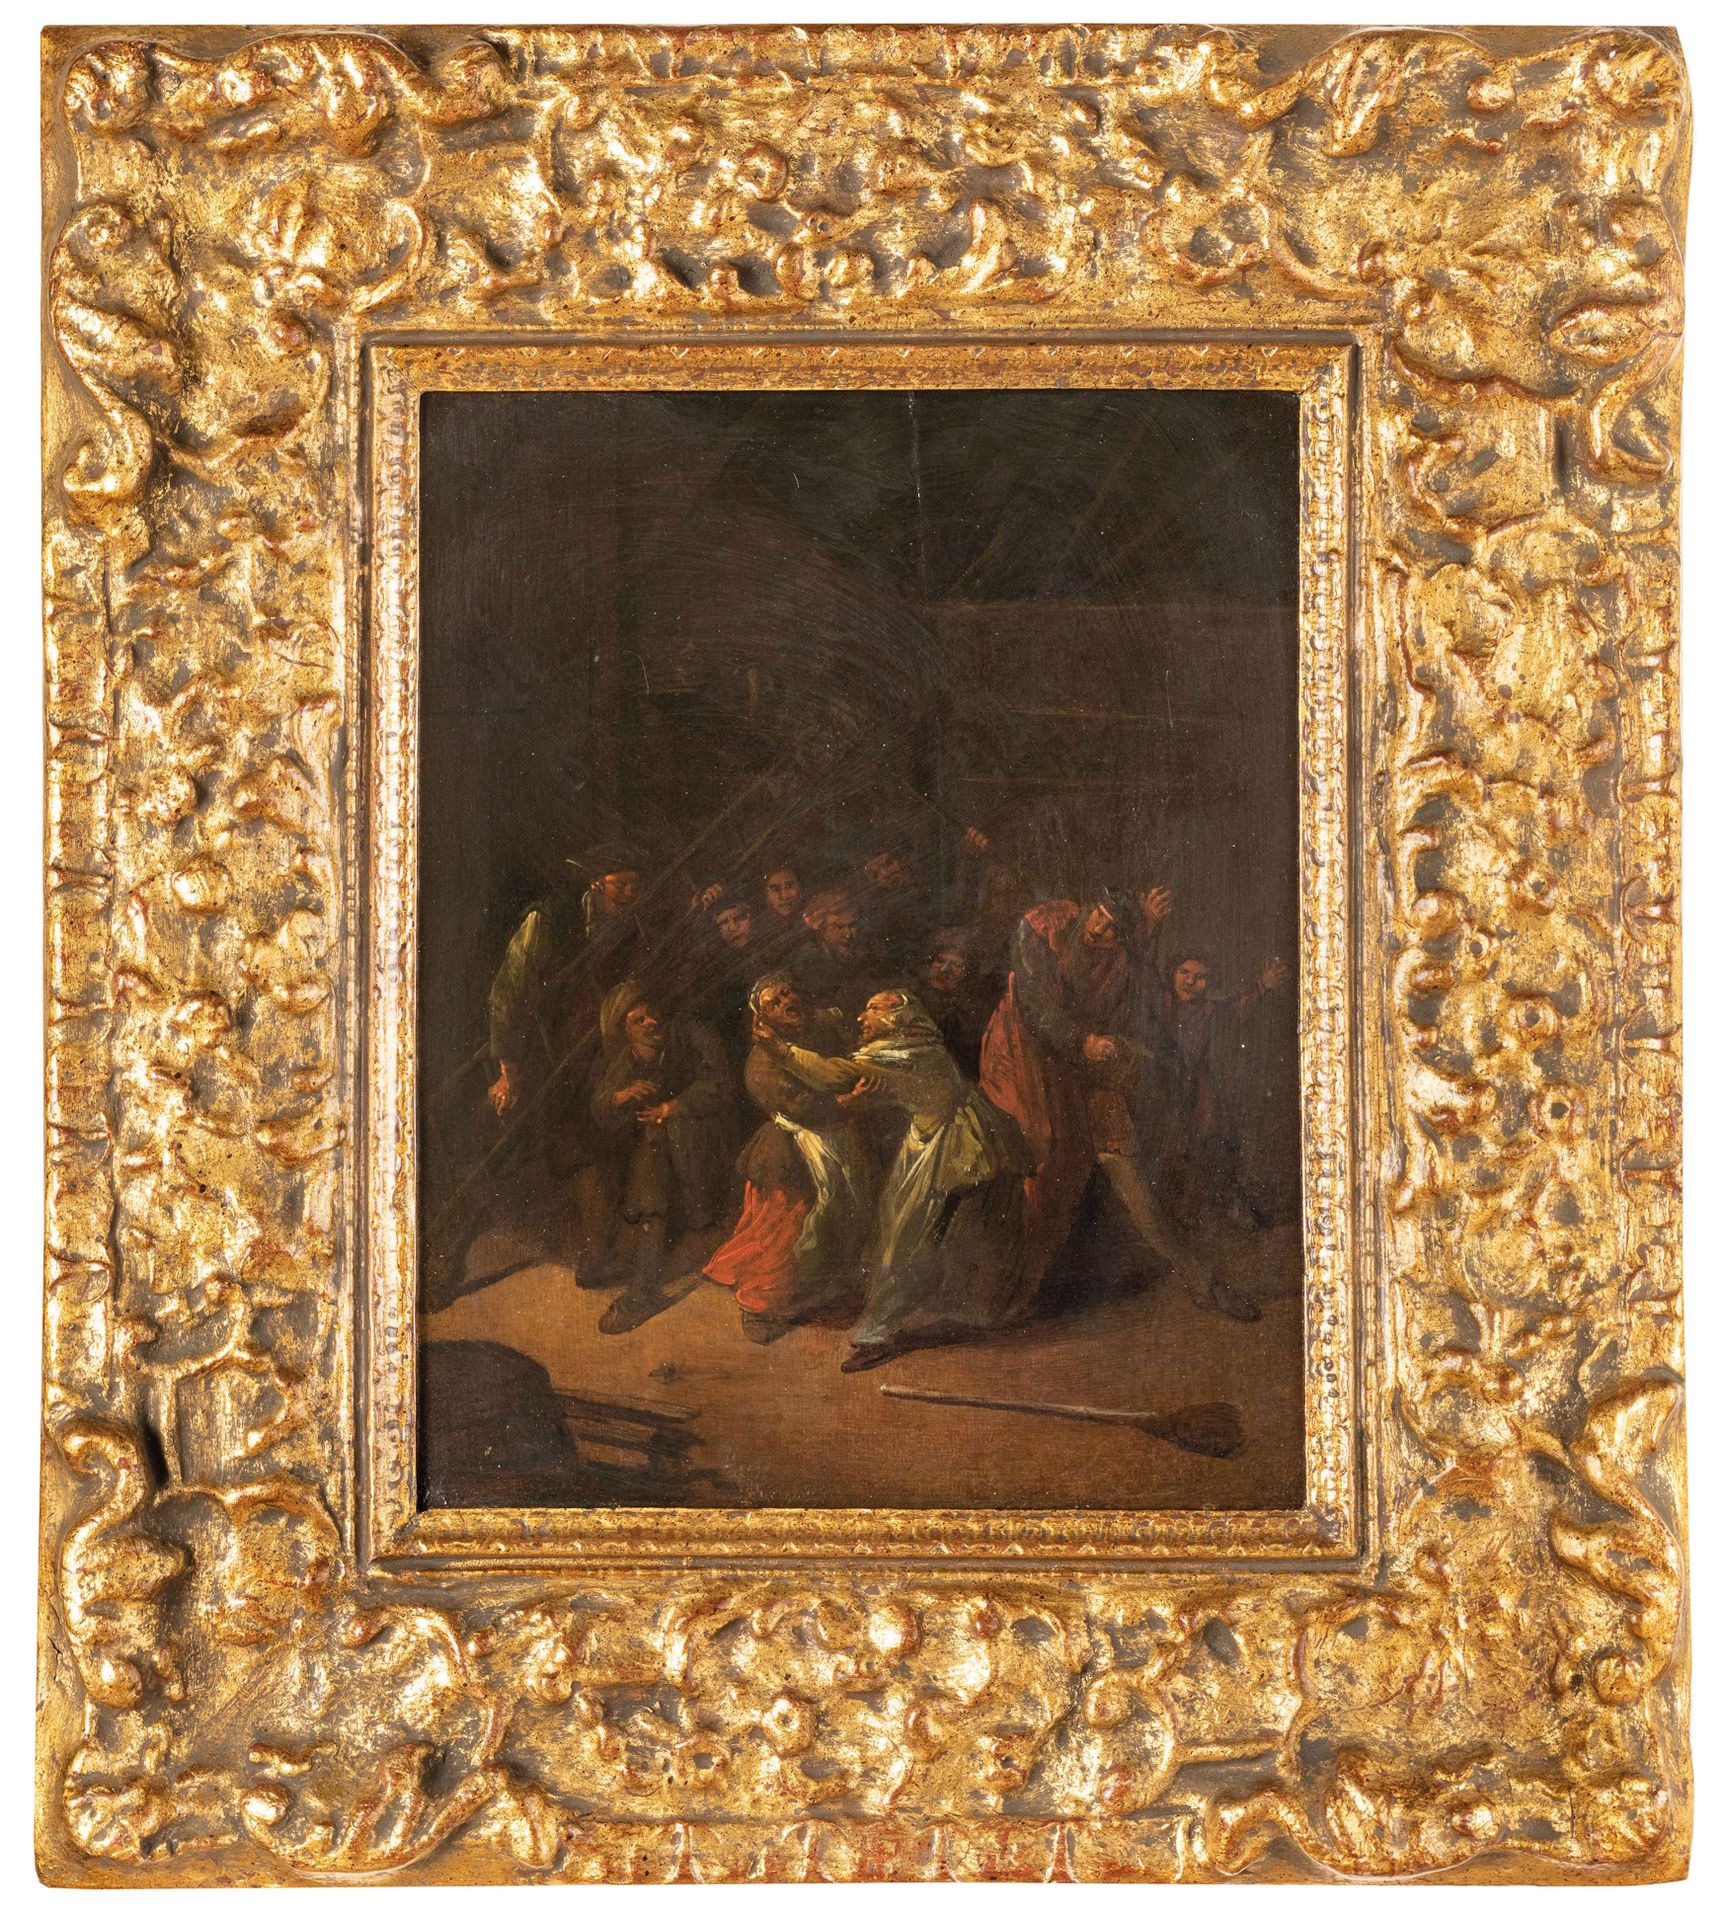 ADRIAEN VAN OSTADE (attr. A) (Haarlem, 1610 - 1685)
酒馆争吵
面板油画，33X27厘米

这幅作品在风格上与&hellip;